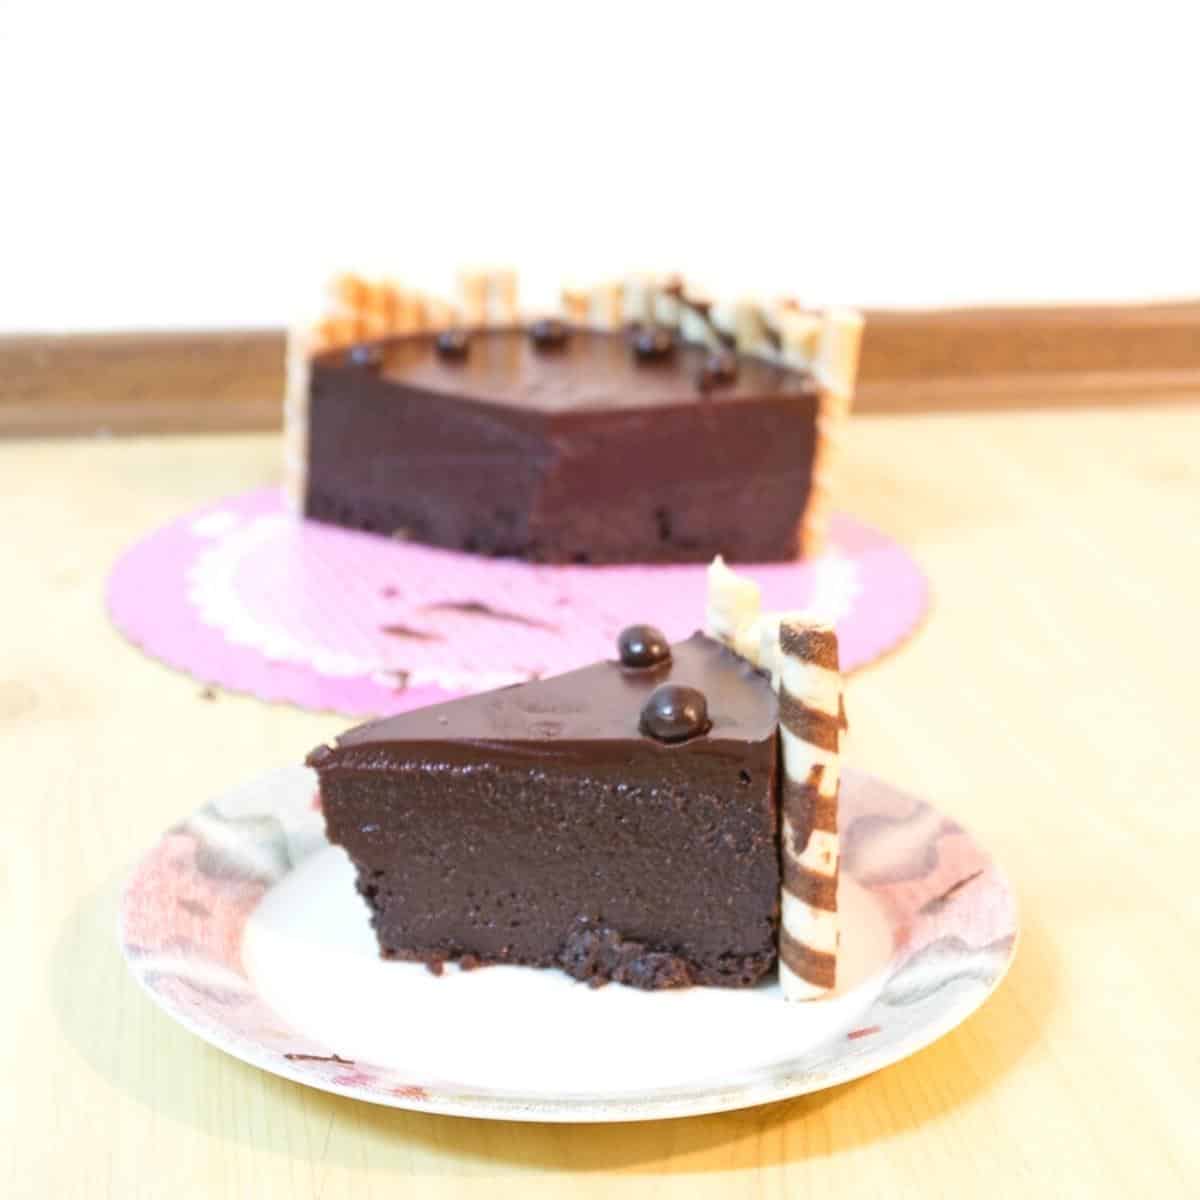 A slice of flourless chocolate birthday cake.